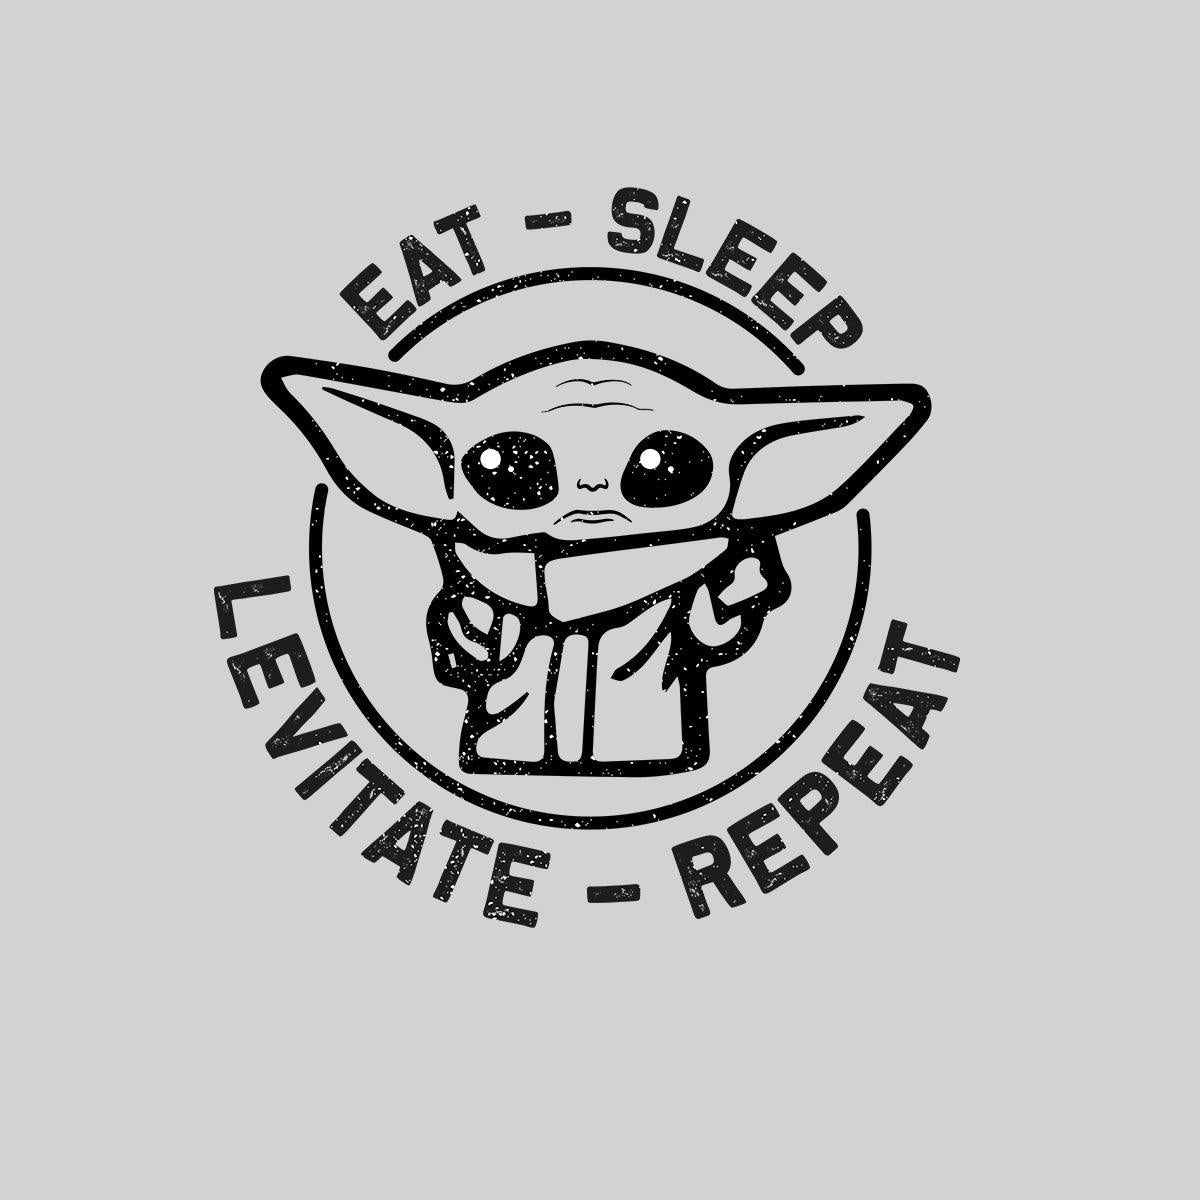 Baby Yoda Novelty Funny Gift T-Shirt Star Wars Mandalorian T-shirt for Kids - Kuzi Tees